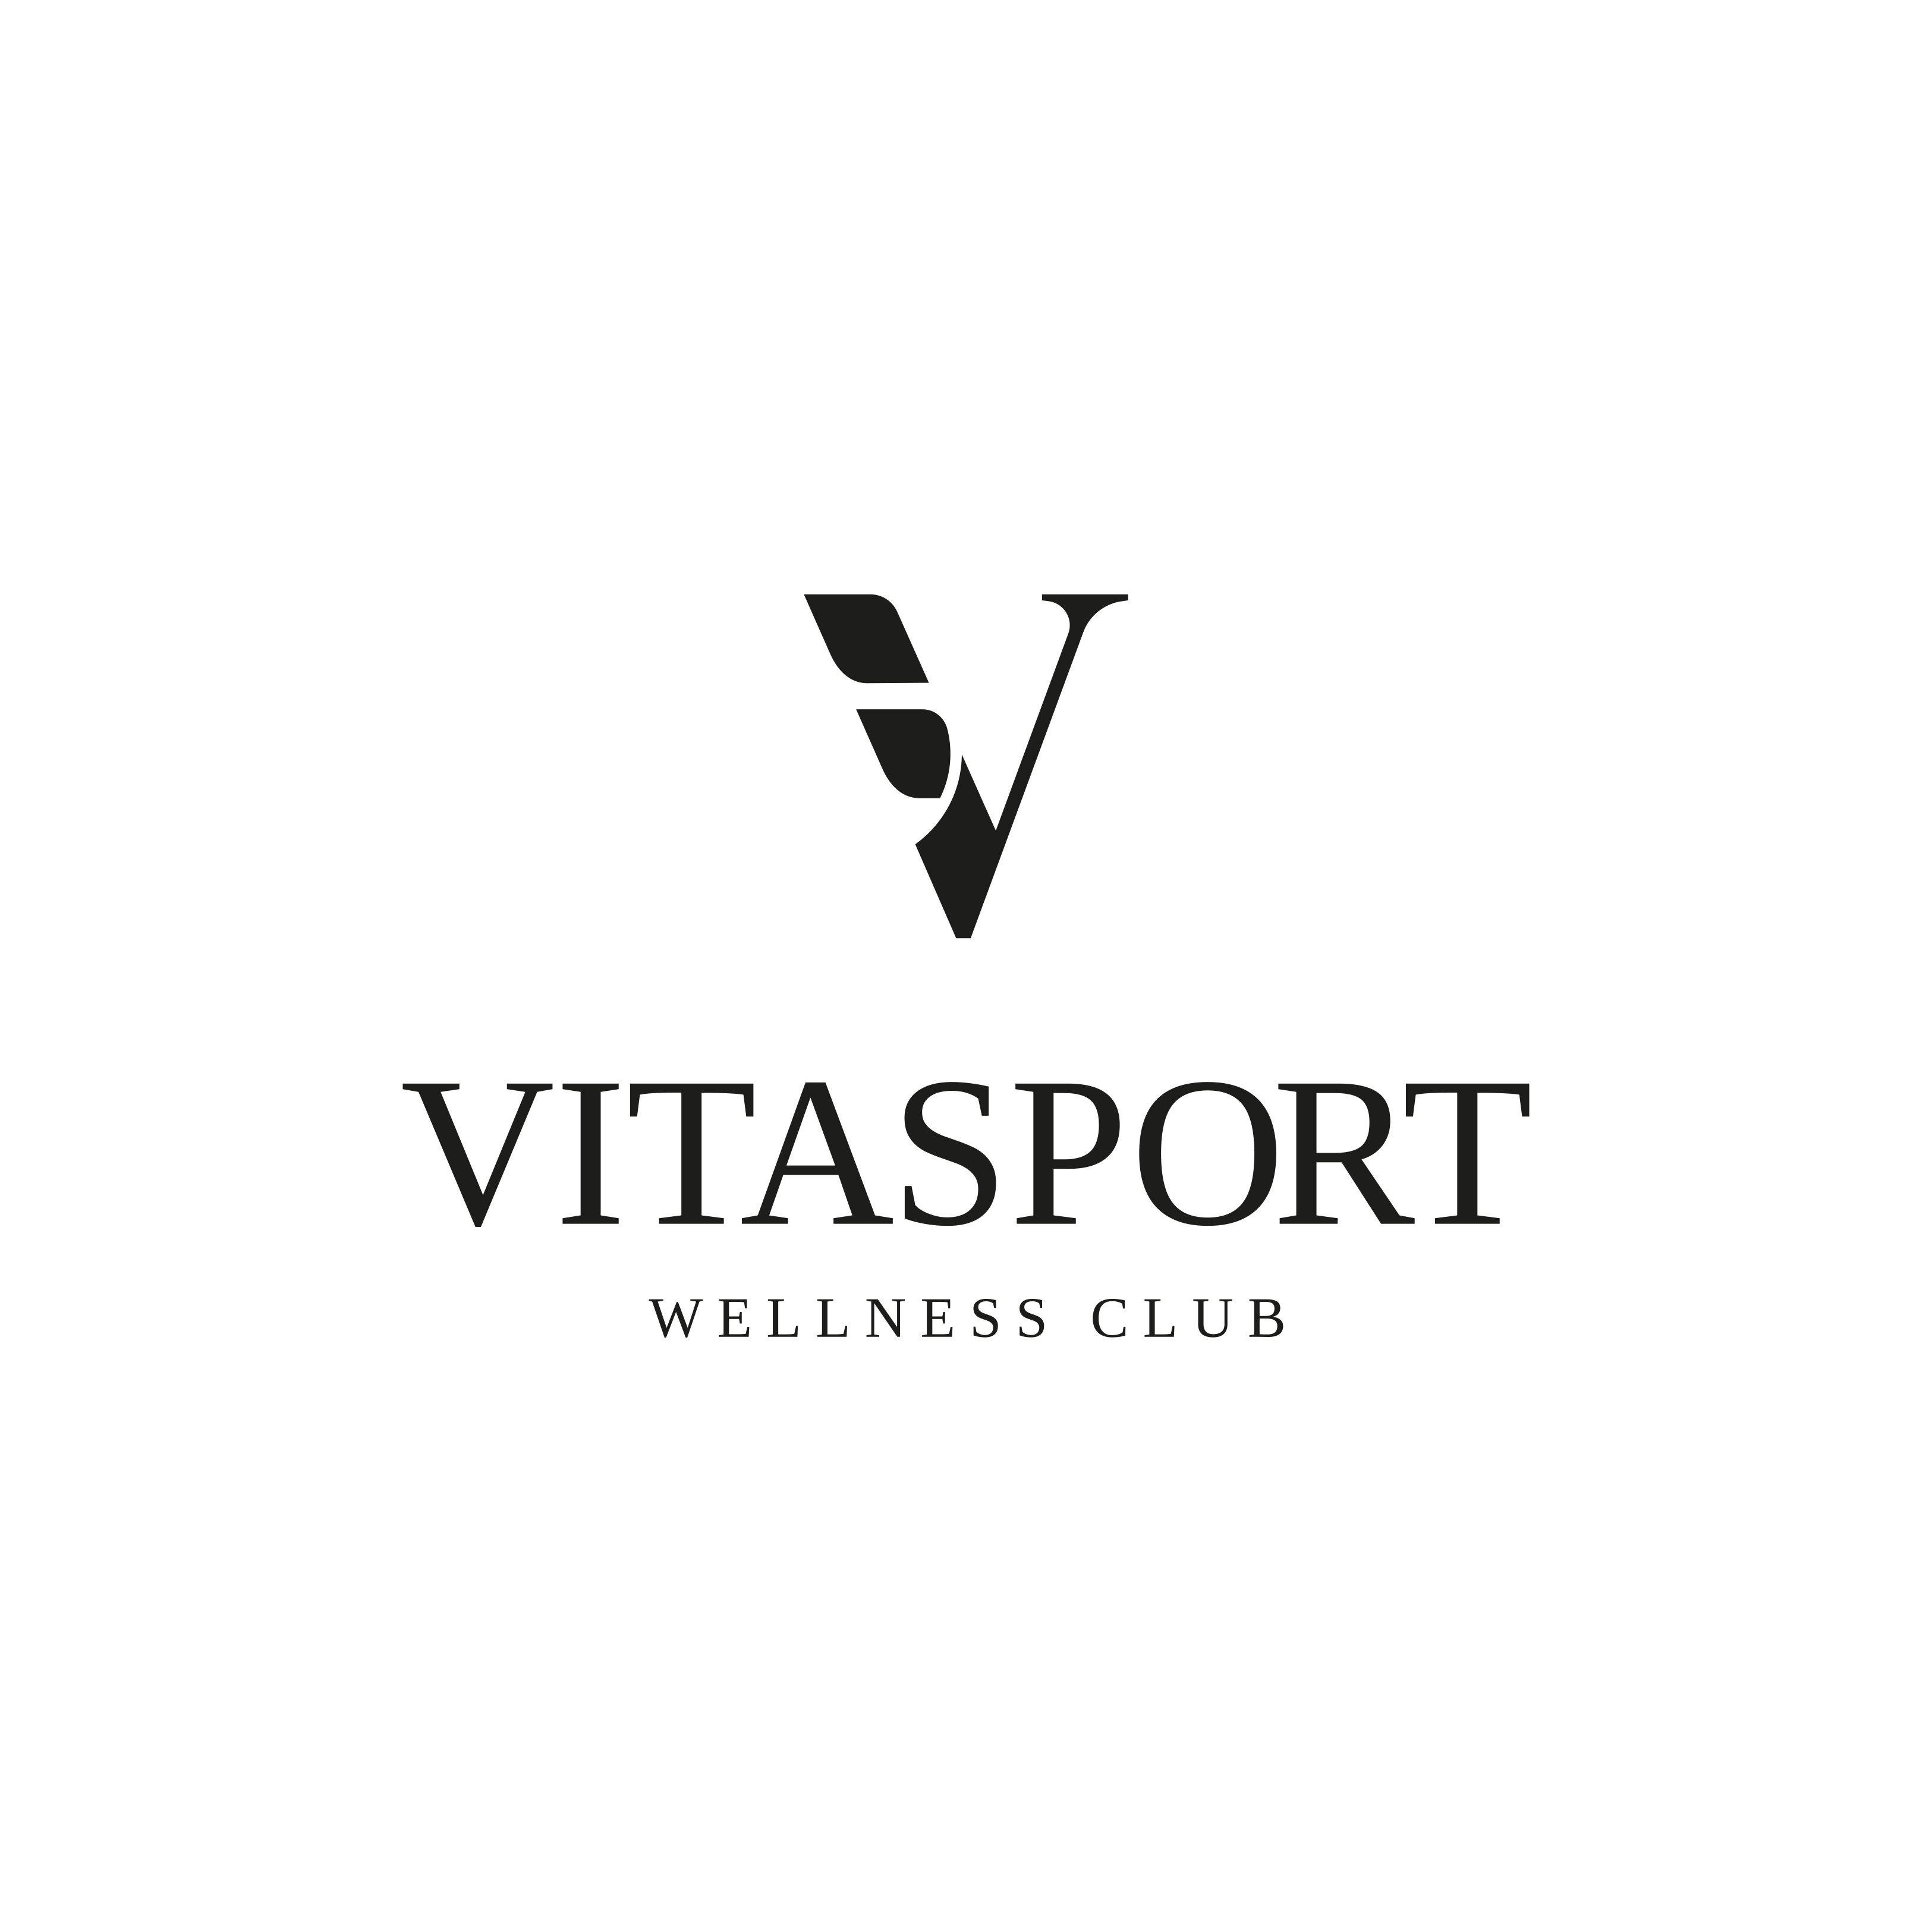 Vitasport Wellness Club